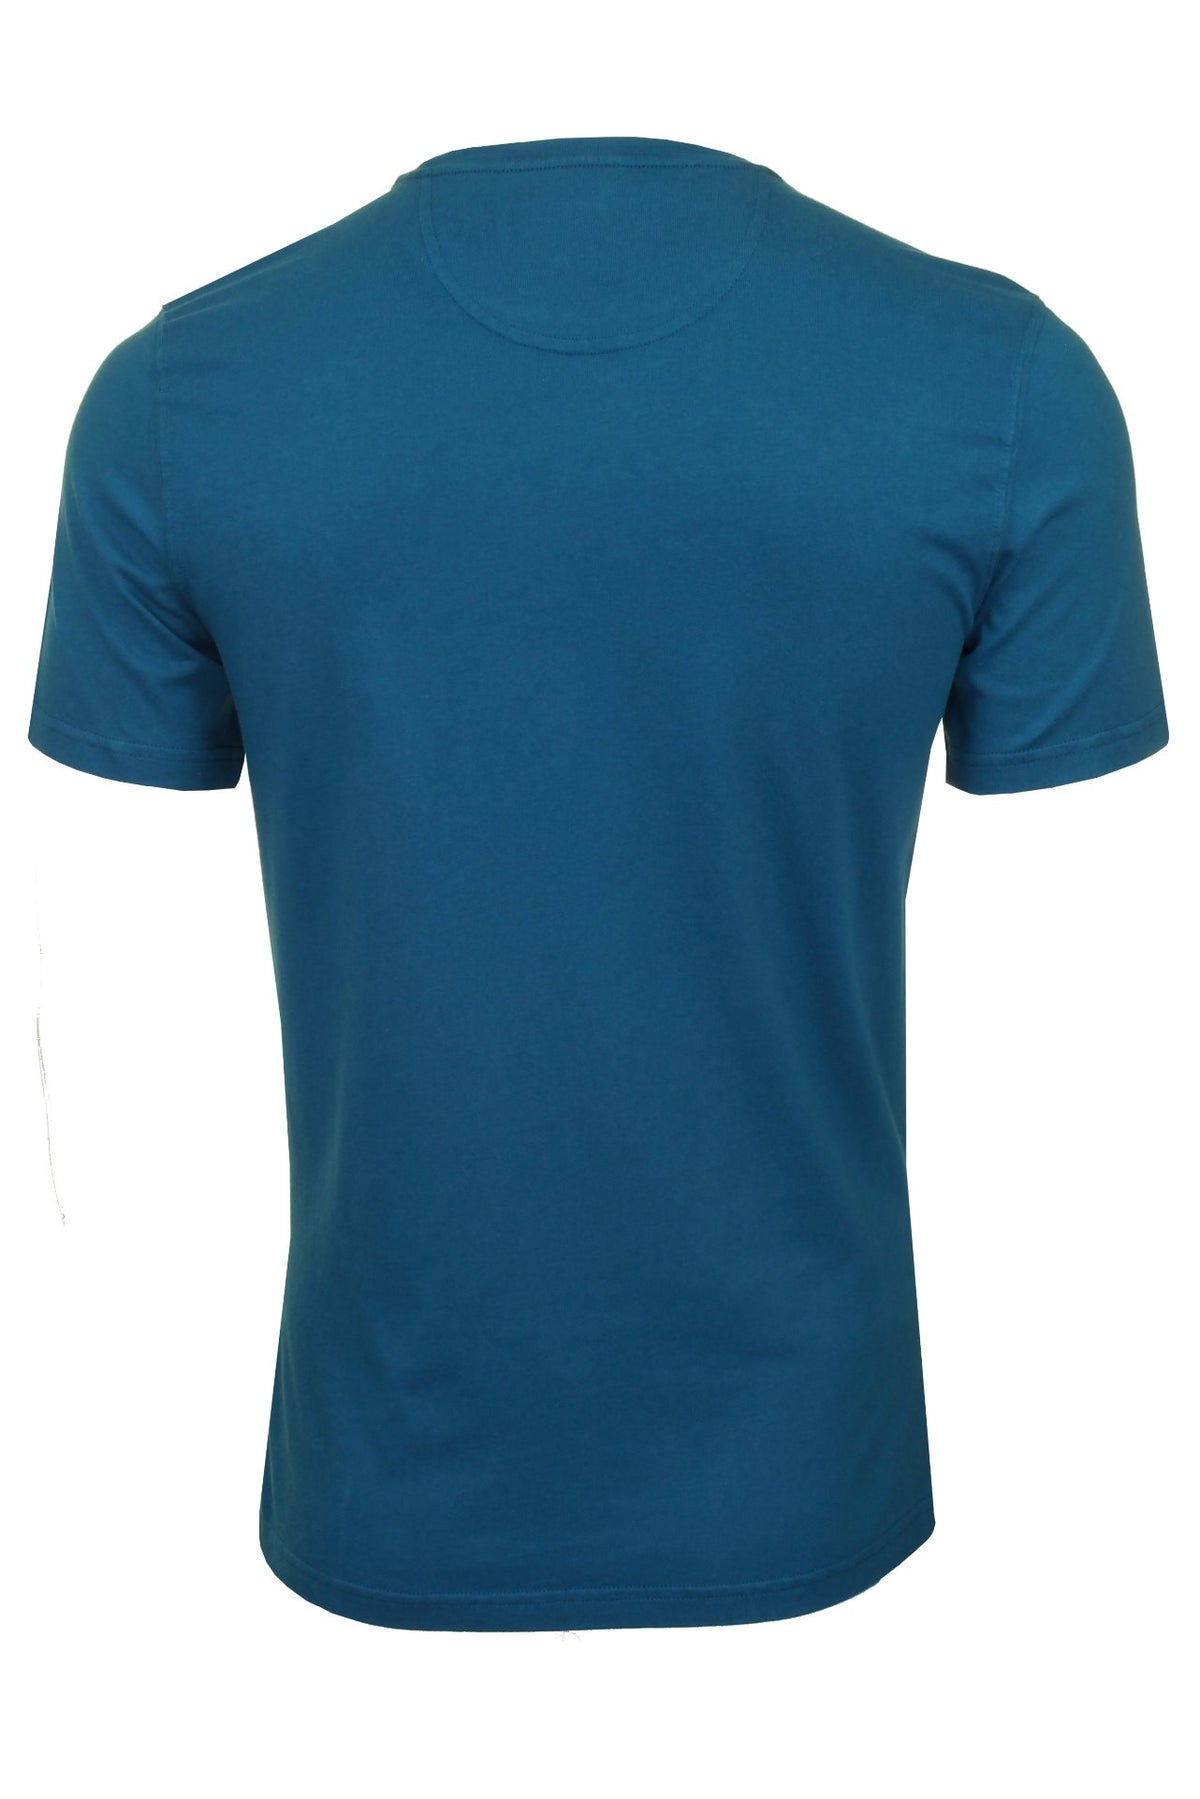 Barbour Men's Sports T-Shirt - Short Sleeved, 03, Mts0331, Lyons Blue